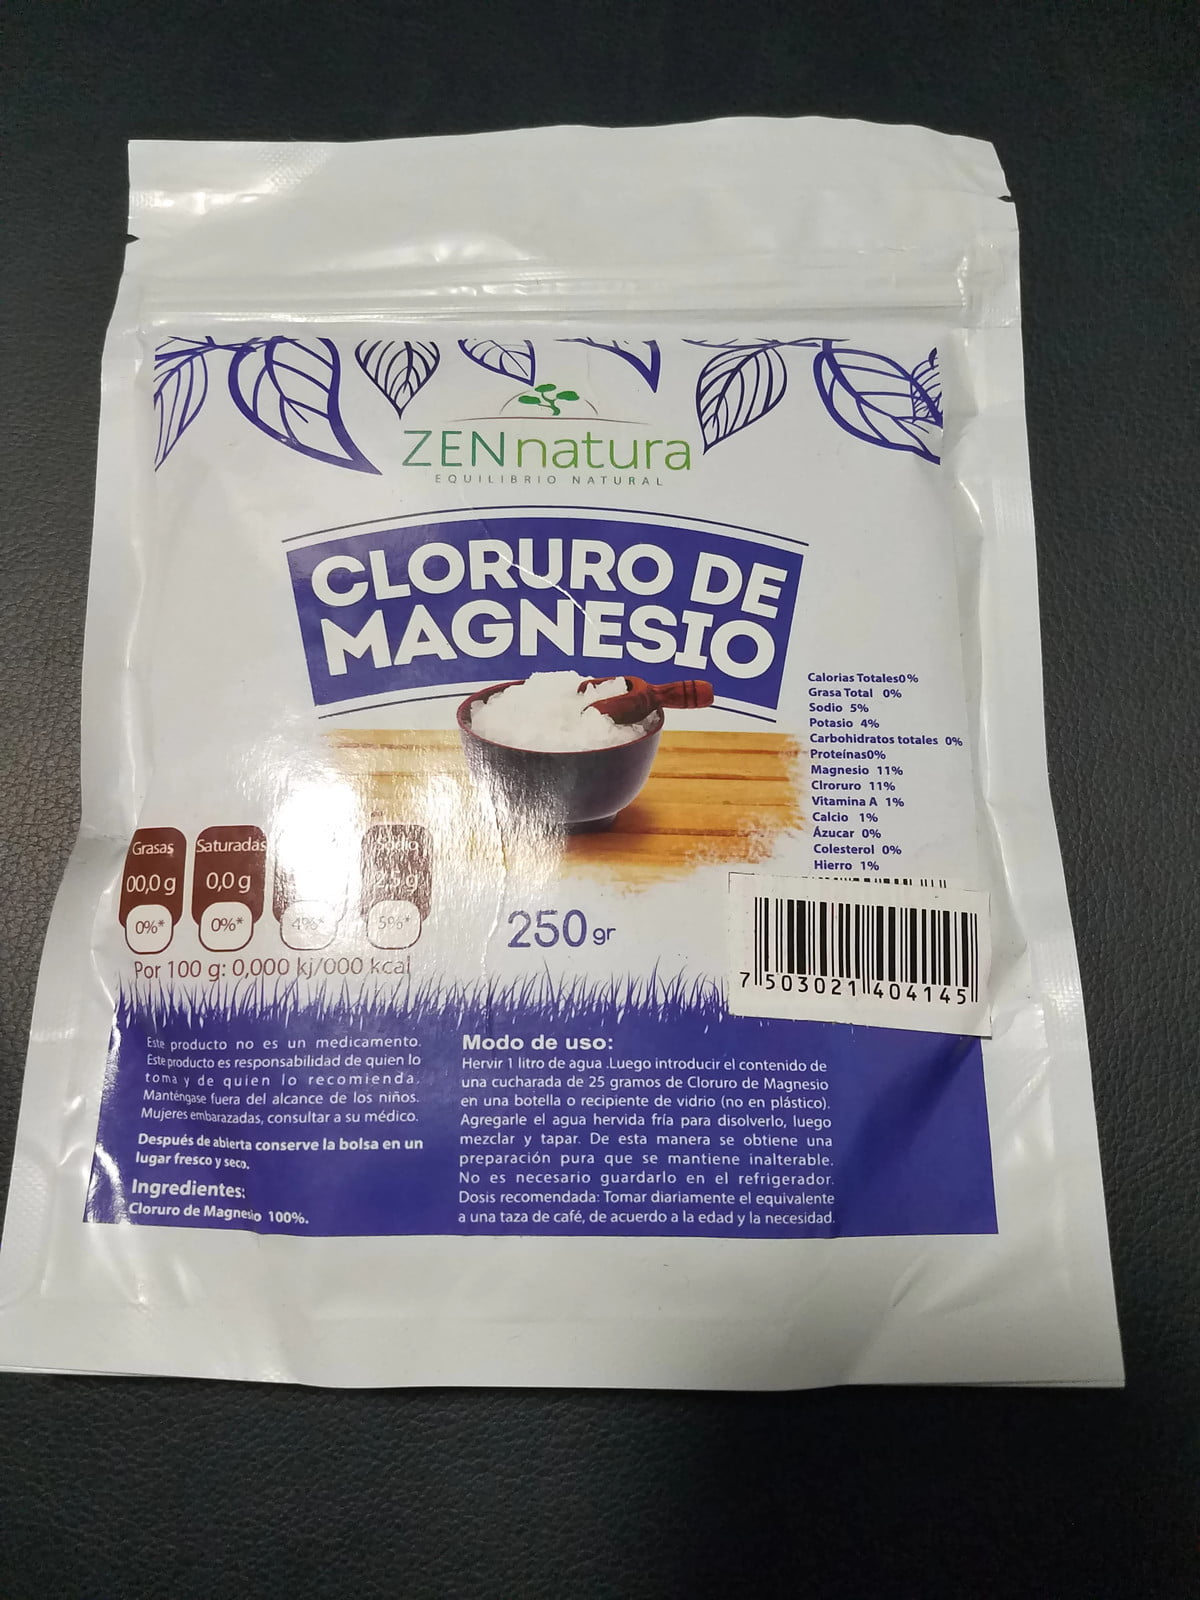 advantage answer Rather Cloruro de Magnesio bolsa 250gr. Magnesium Chloride 250gr bag.Zen Natura -  Walmart.com